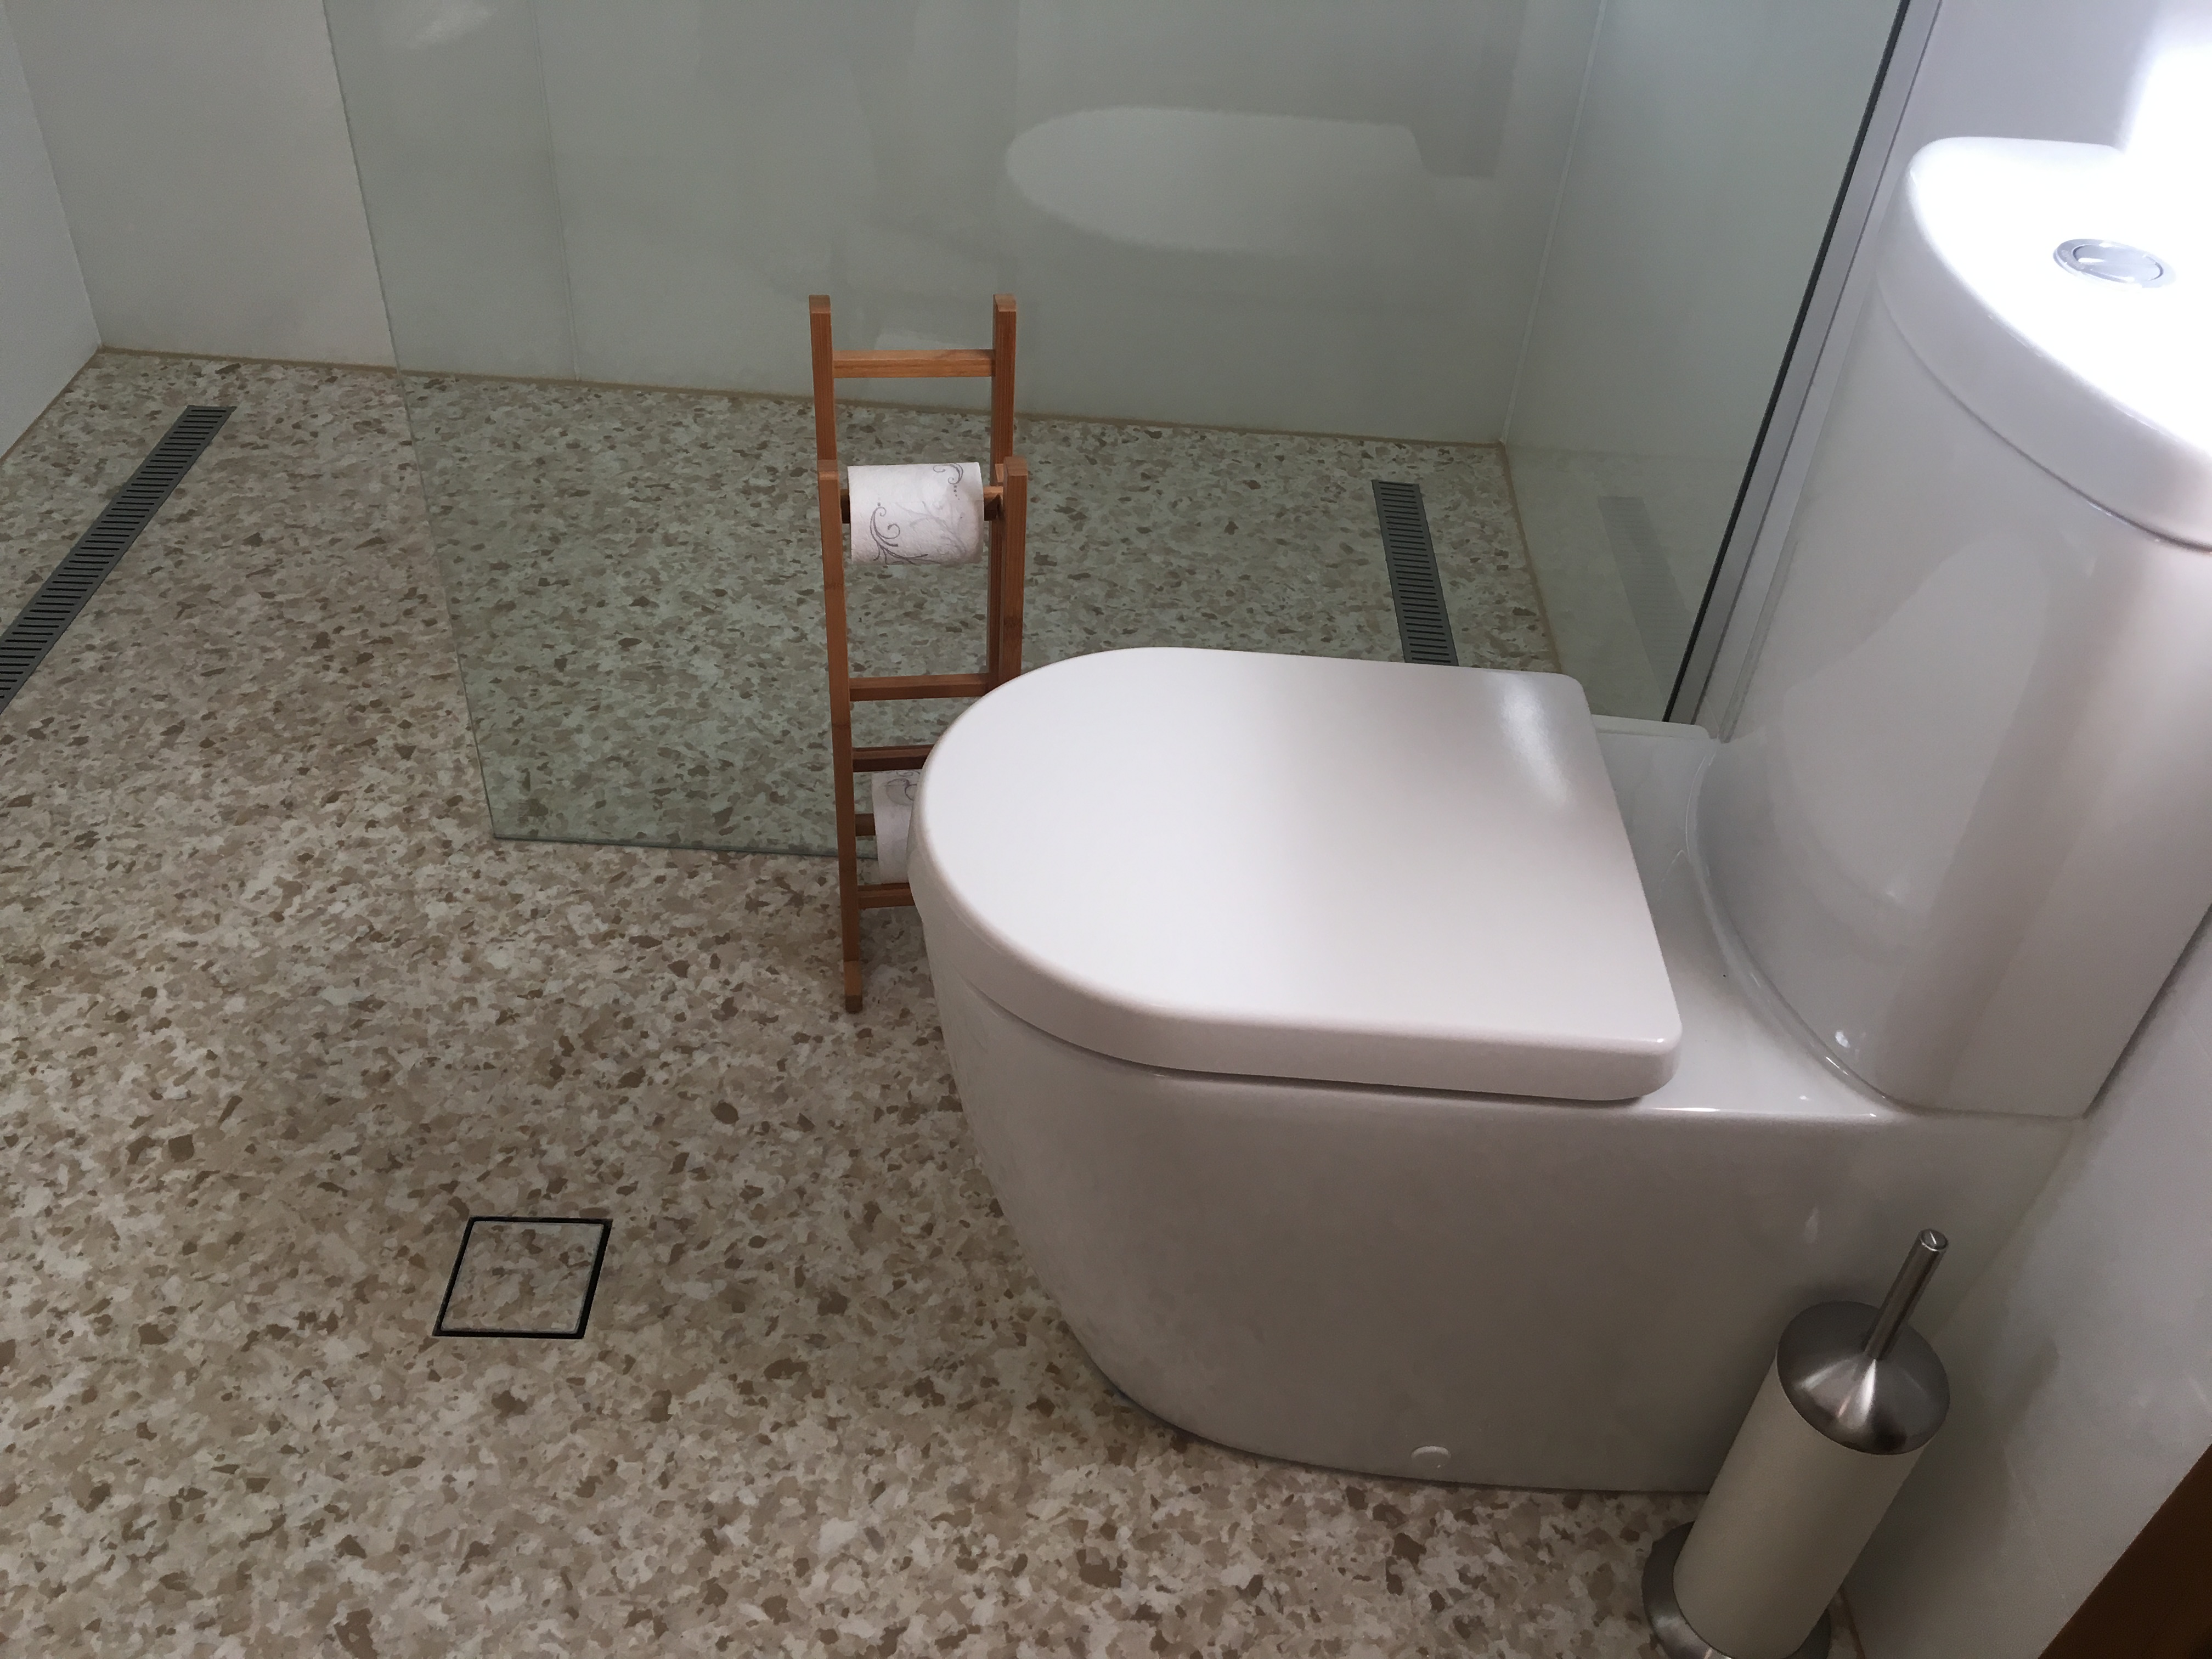 Seamless Slip-resistant Bathroom Floor